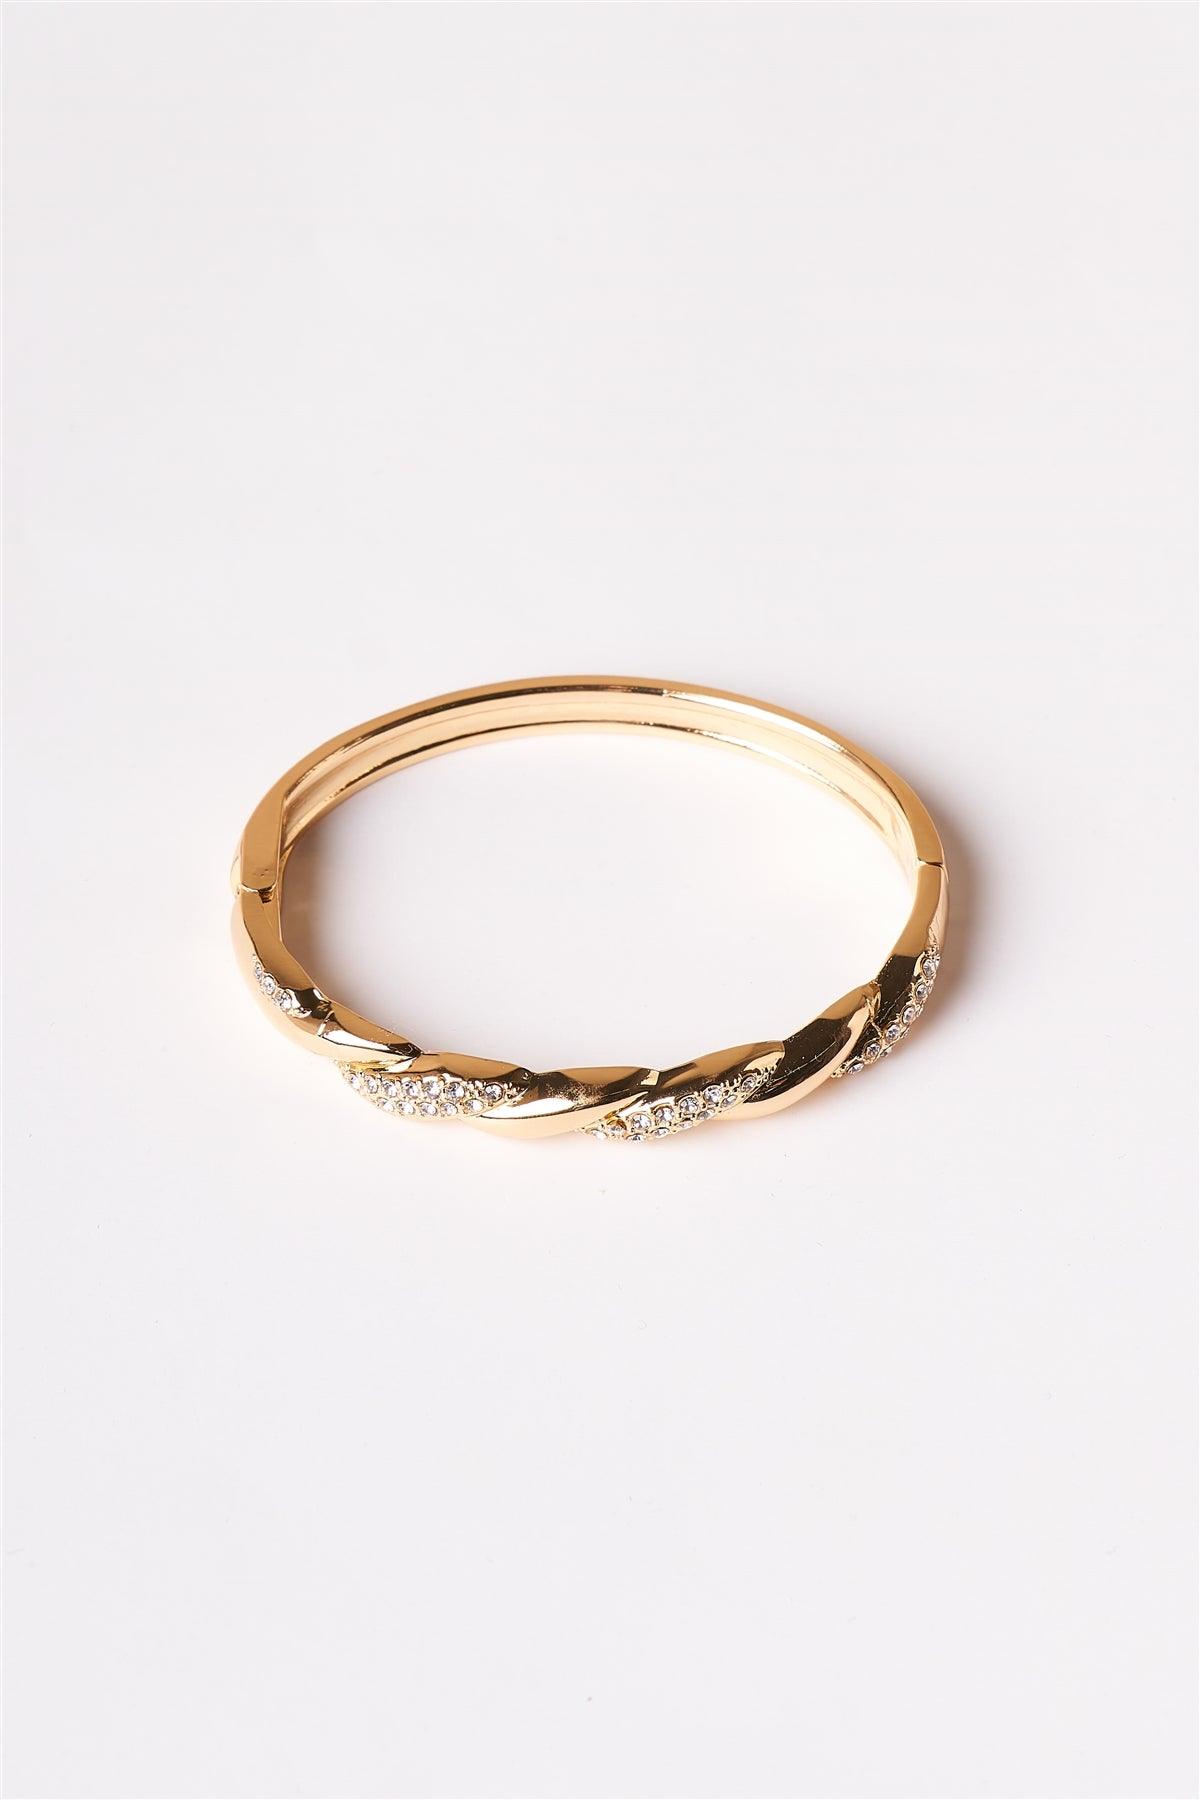 Gold Twist Bangle Bracelet /1 Piece